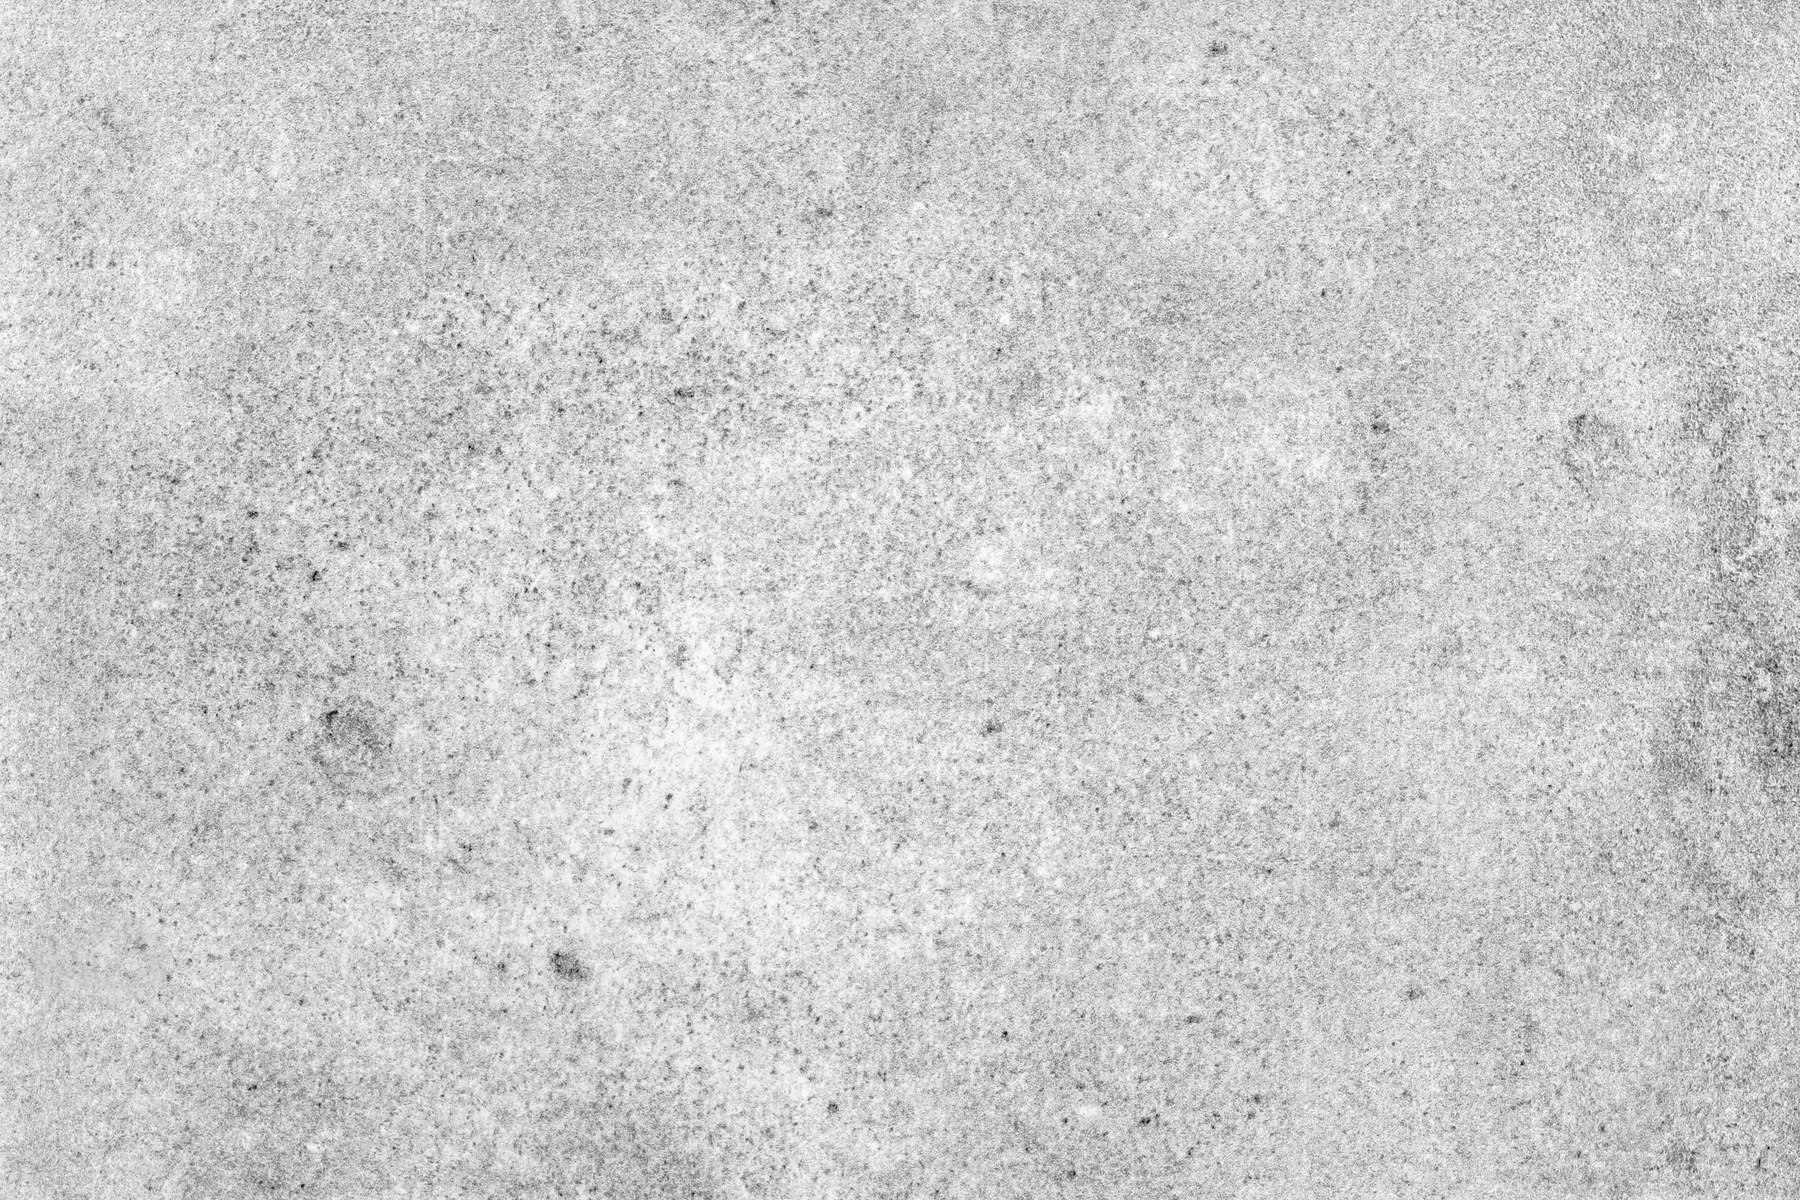 Texture of gray stone floor, background